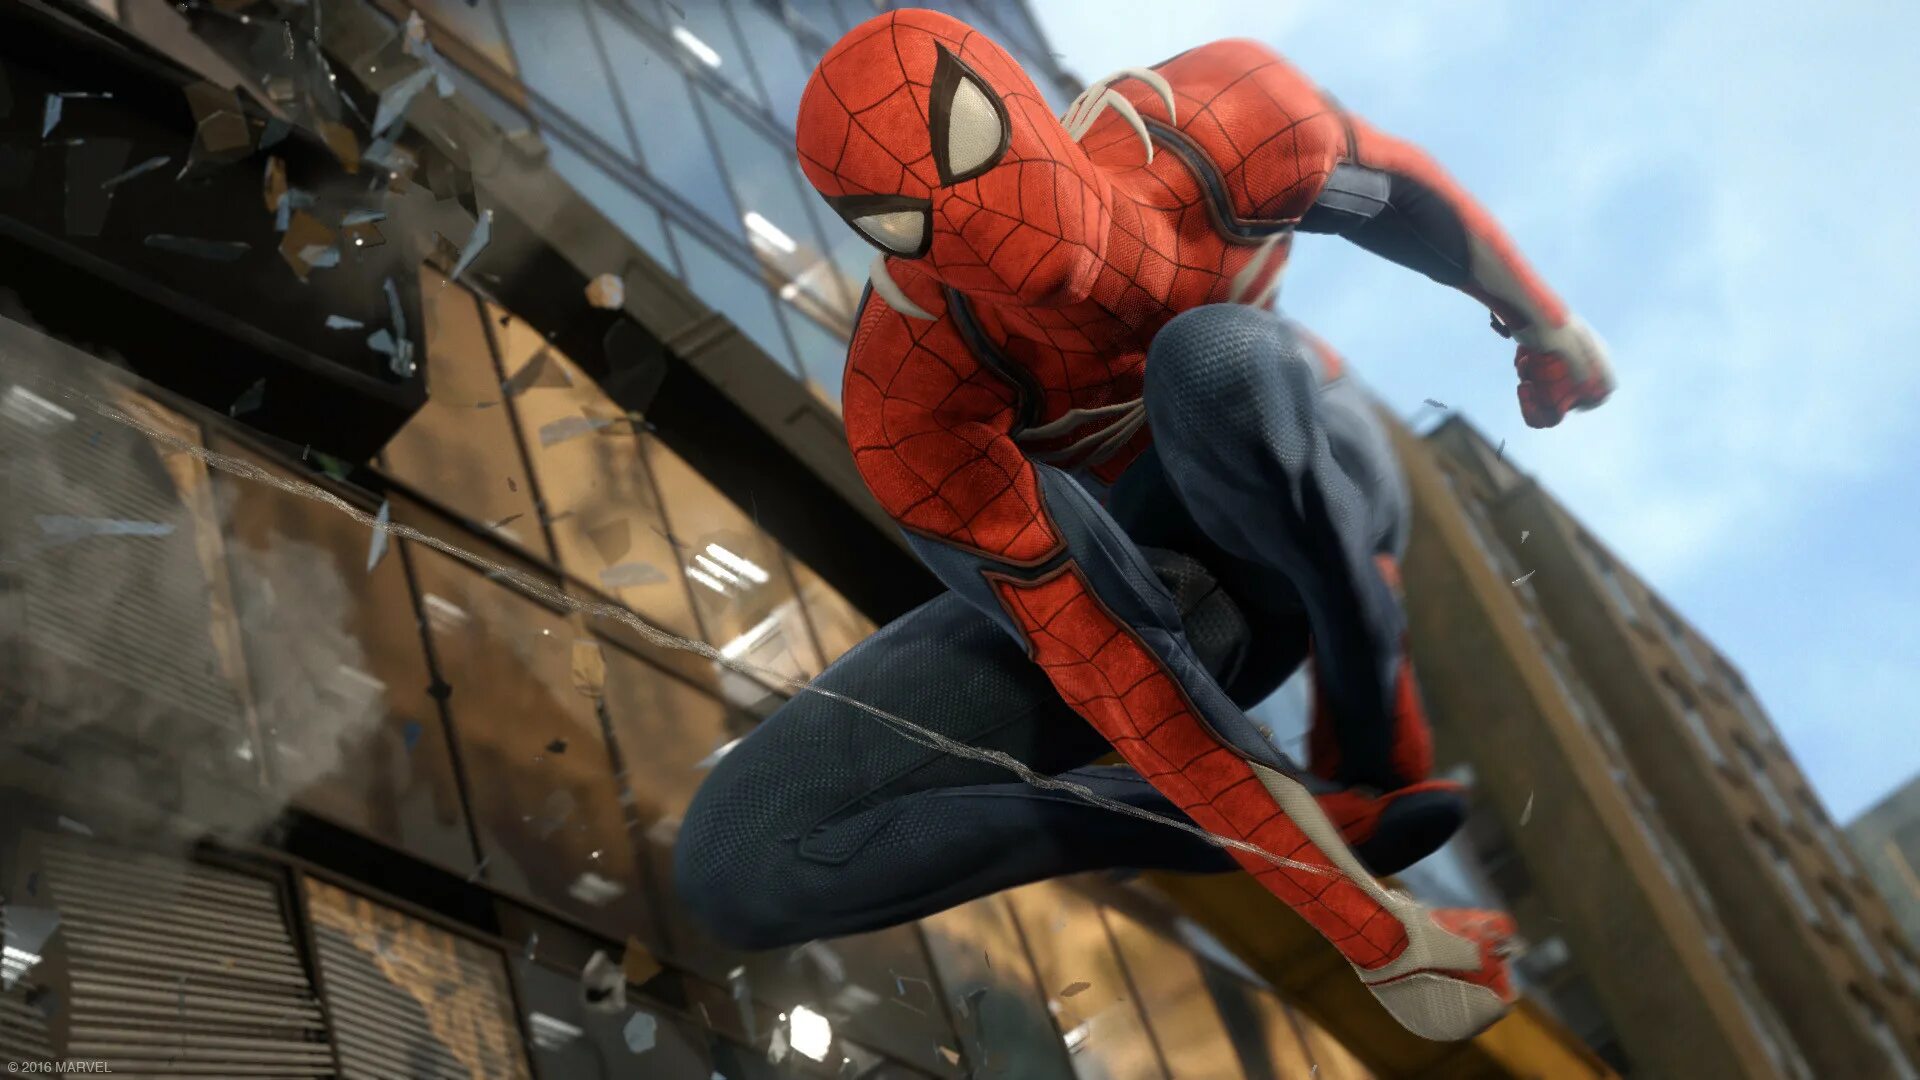 Spider man ps4. Marvel Spider man игра 2018. Марвел человек паук игра на ps4. Марвел человек паук пс4. Самого последнего человека паука